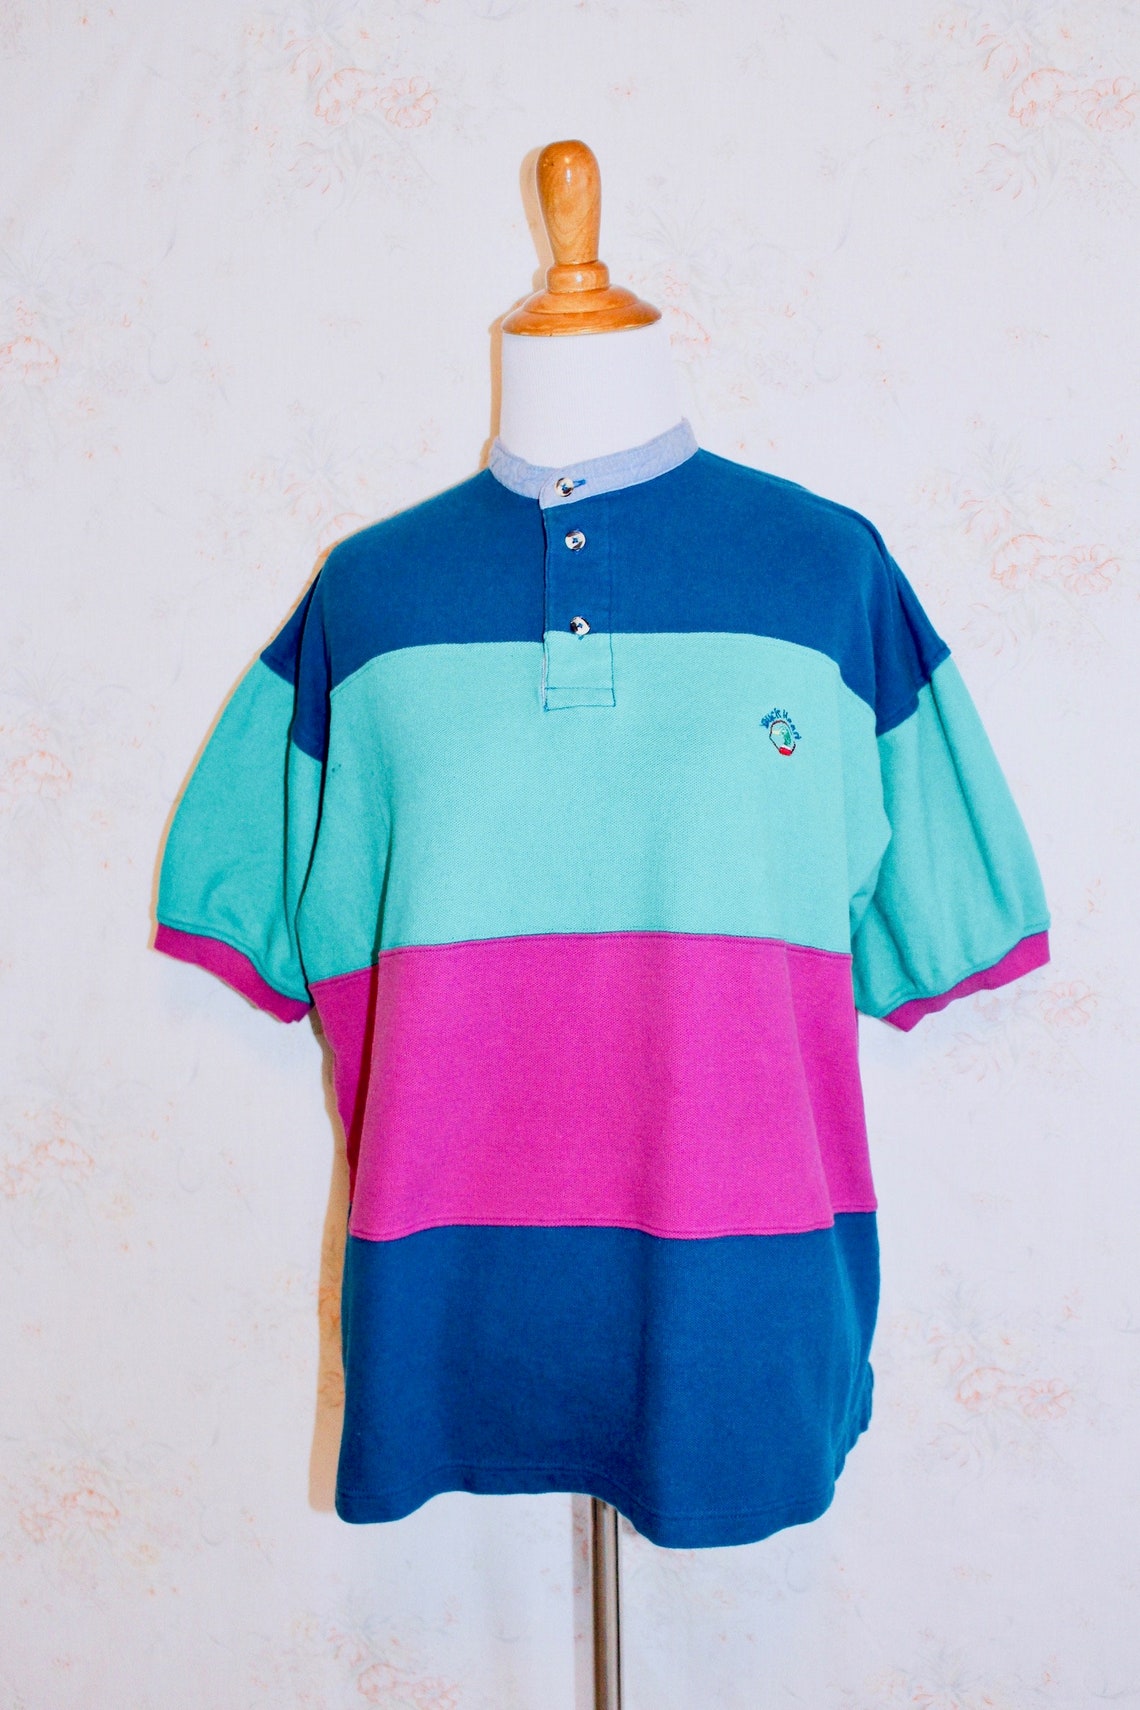 Vintage 90s Colorblock Shirt 1990s Striped Shirt Bright | Etsy